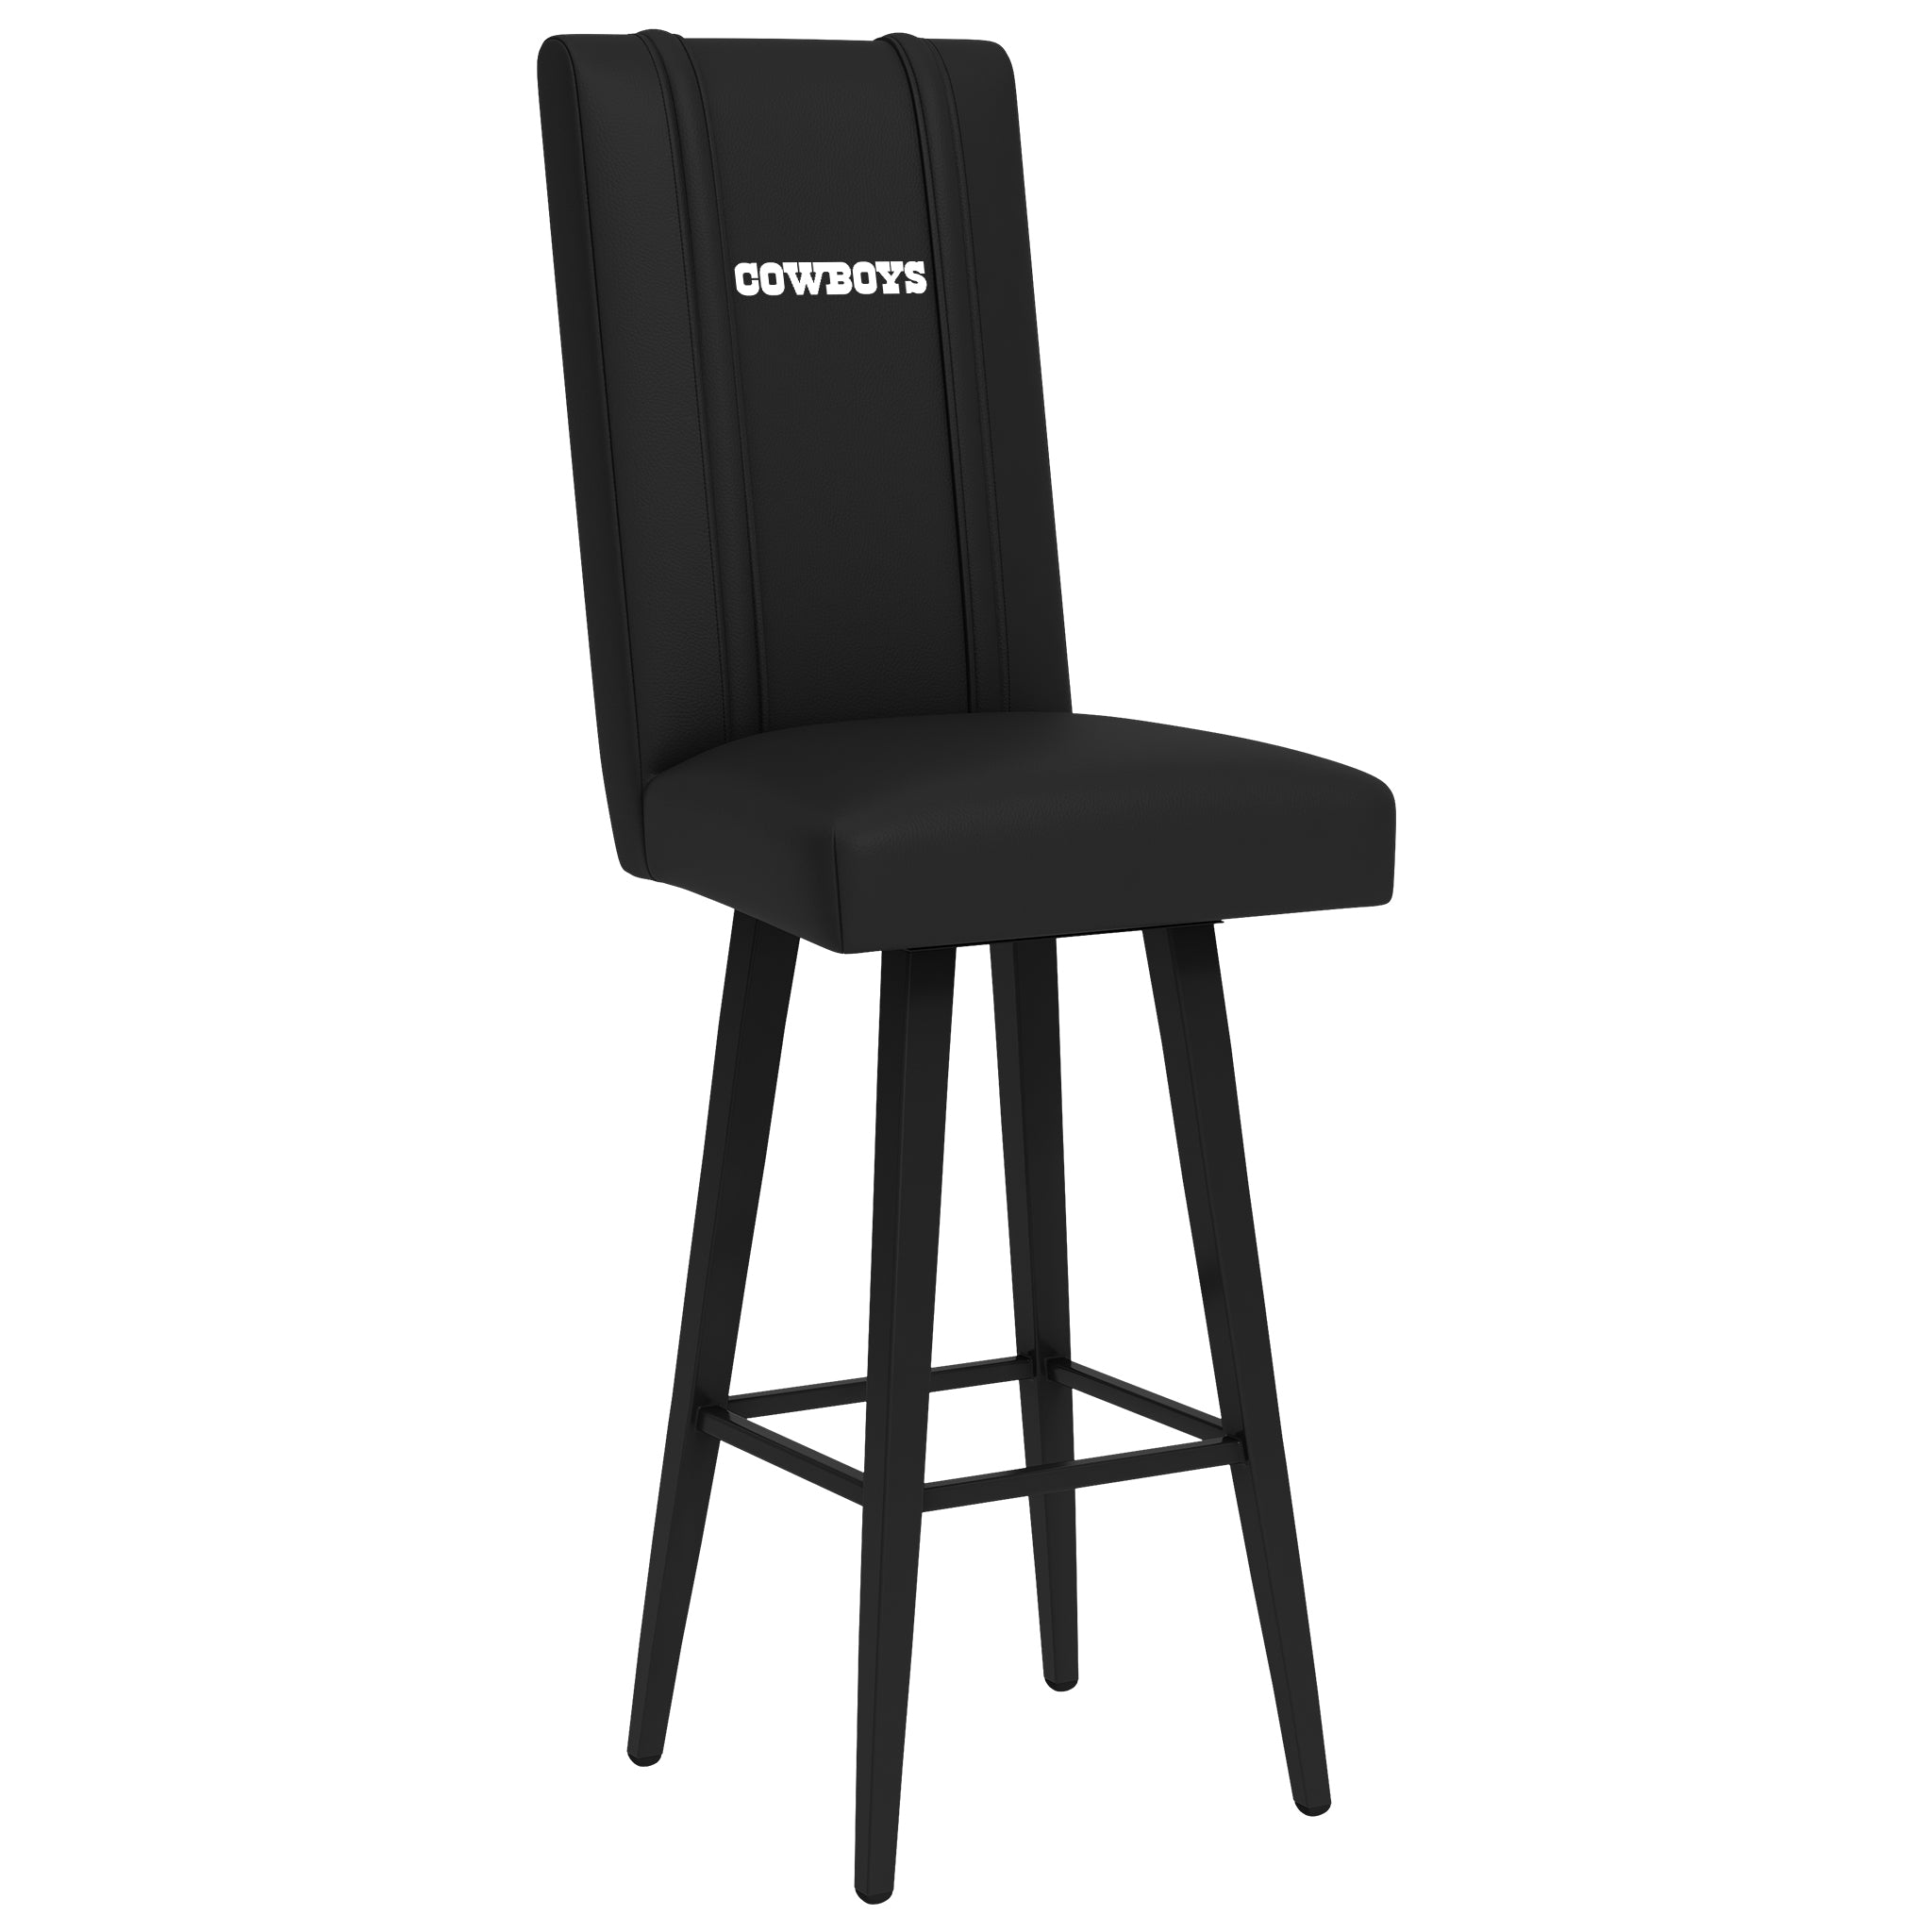 Dallas Cowboys Swivel Bar Stool - Chair - Furniture - Kitchen